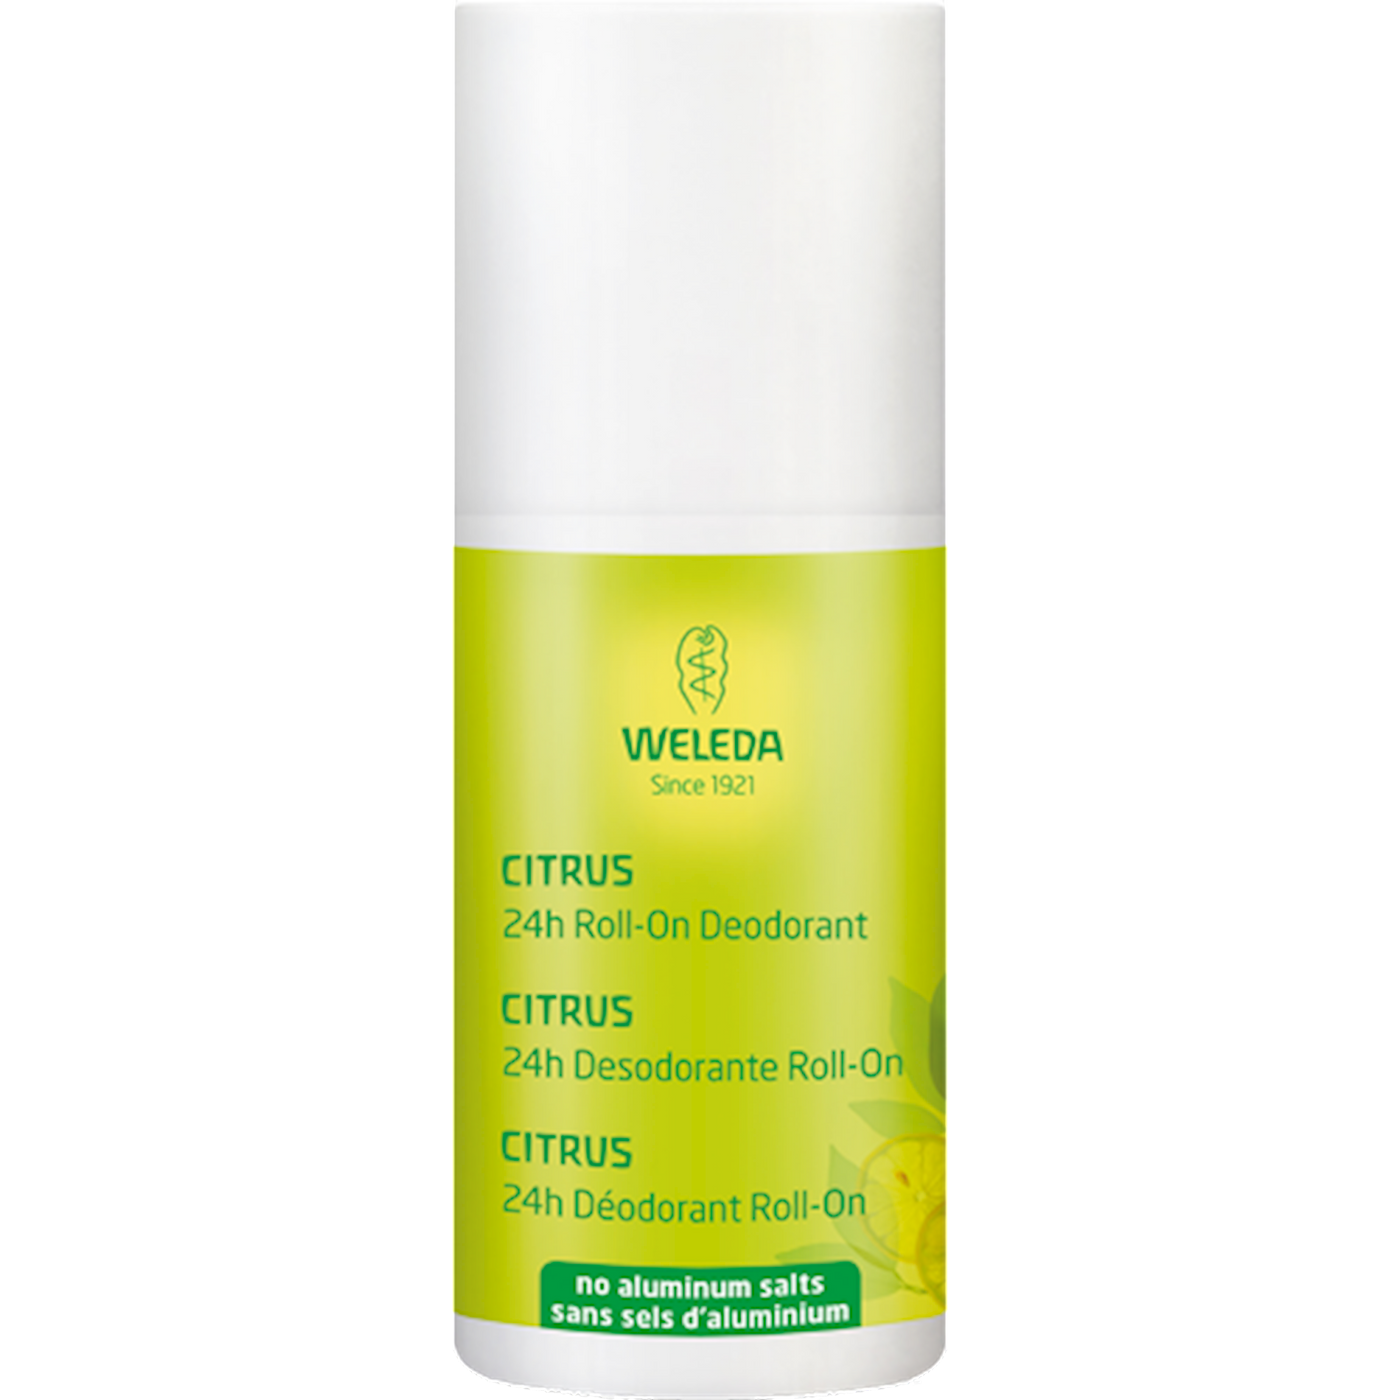 Citrus 24h Roll-On Deodorant 1.7 fl oz Curated Wellness